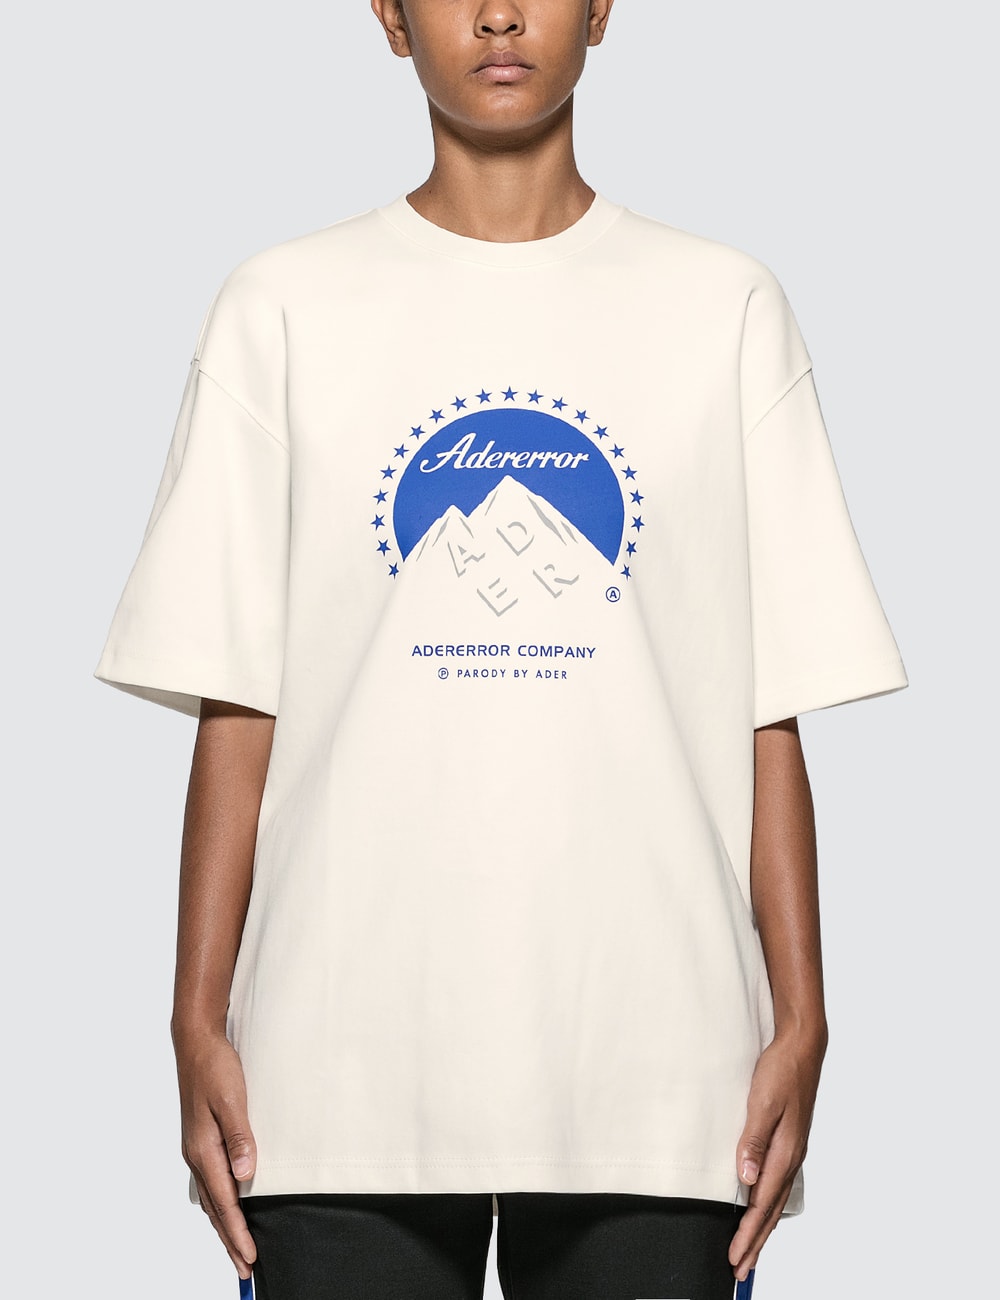 Ader Error - Adererror Company Oversized T-Shirt | HBX